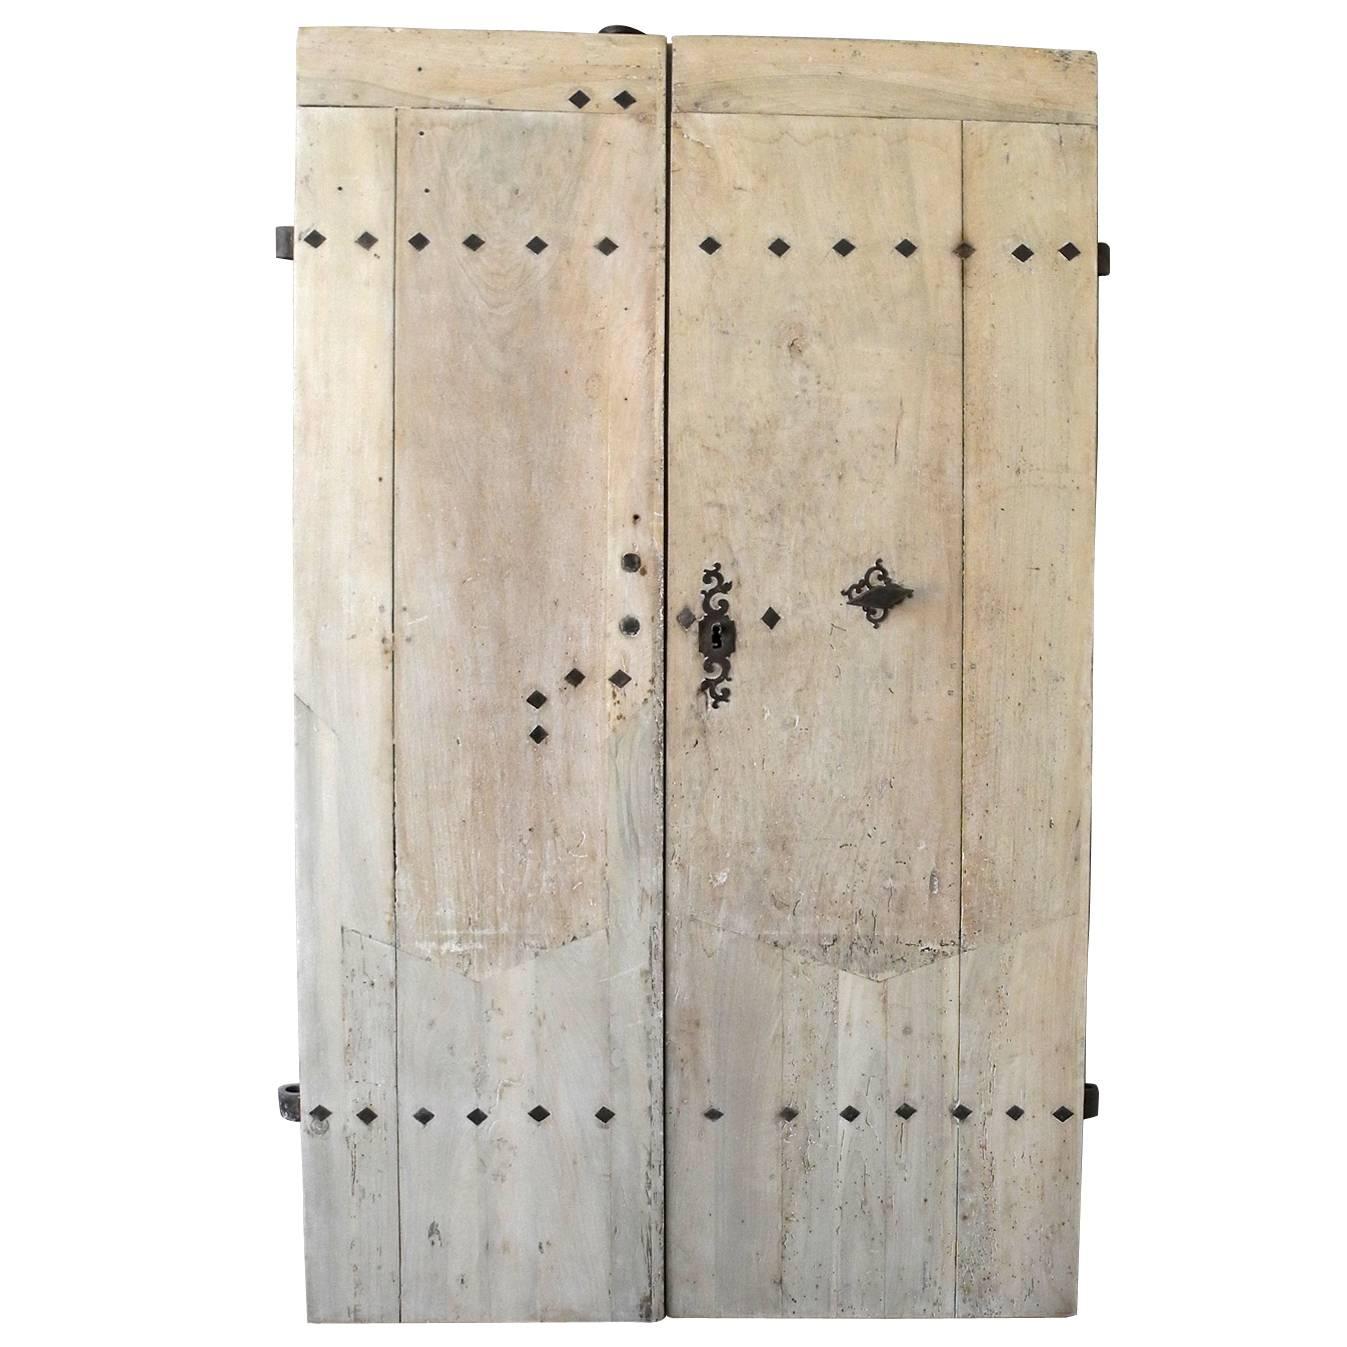 Pair of 18th Century Natural Walnut Doors with Nailheads and Original Hardware